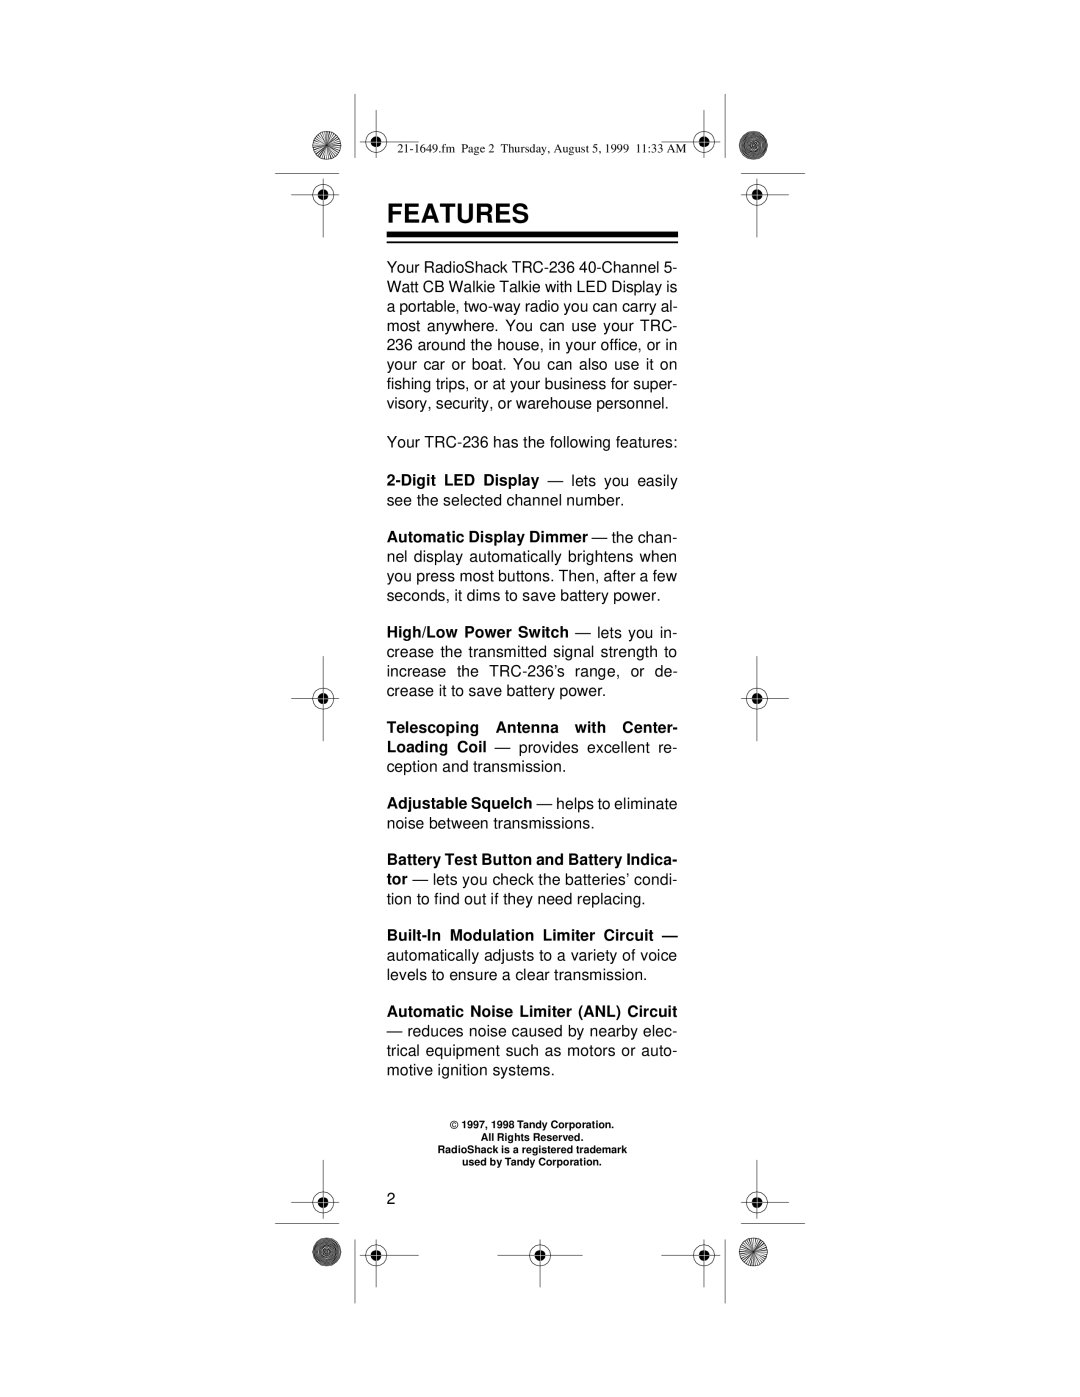 Radio Shack TRC-236 owner manual Features 